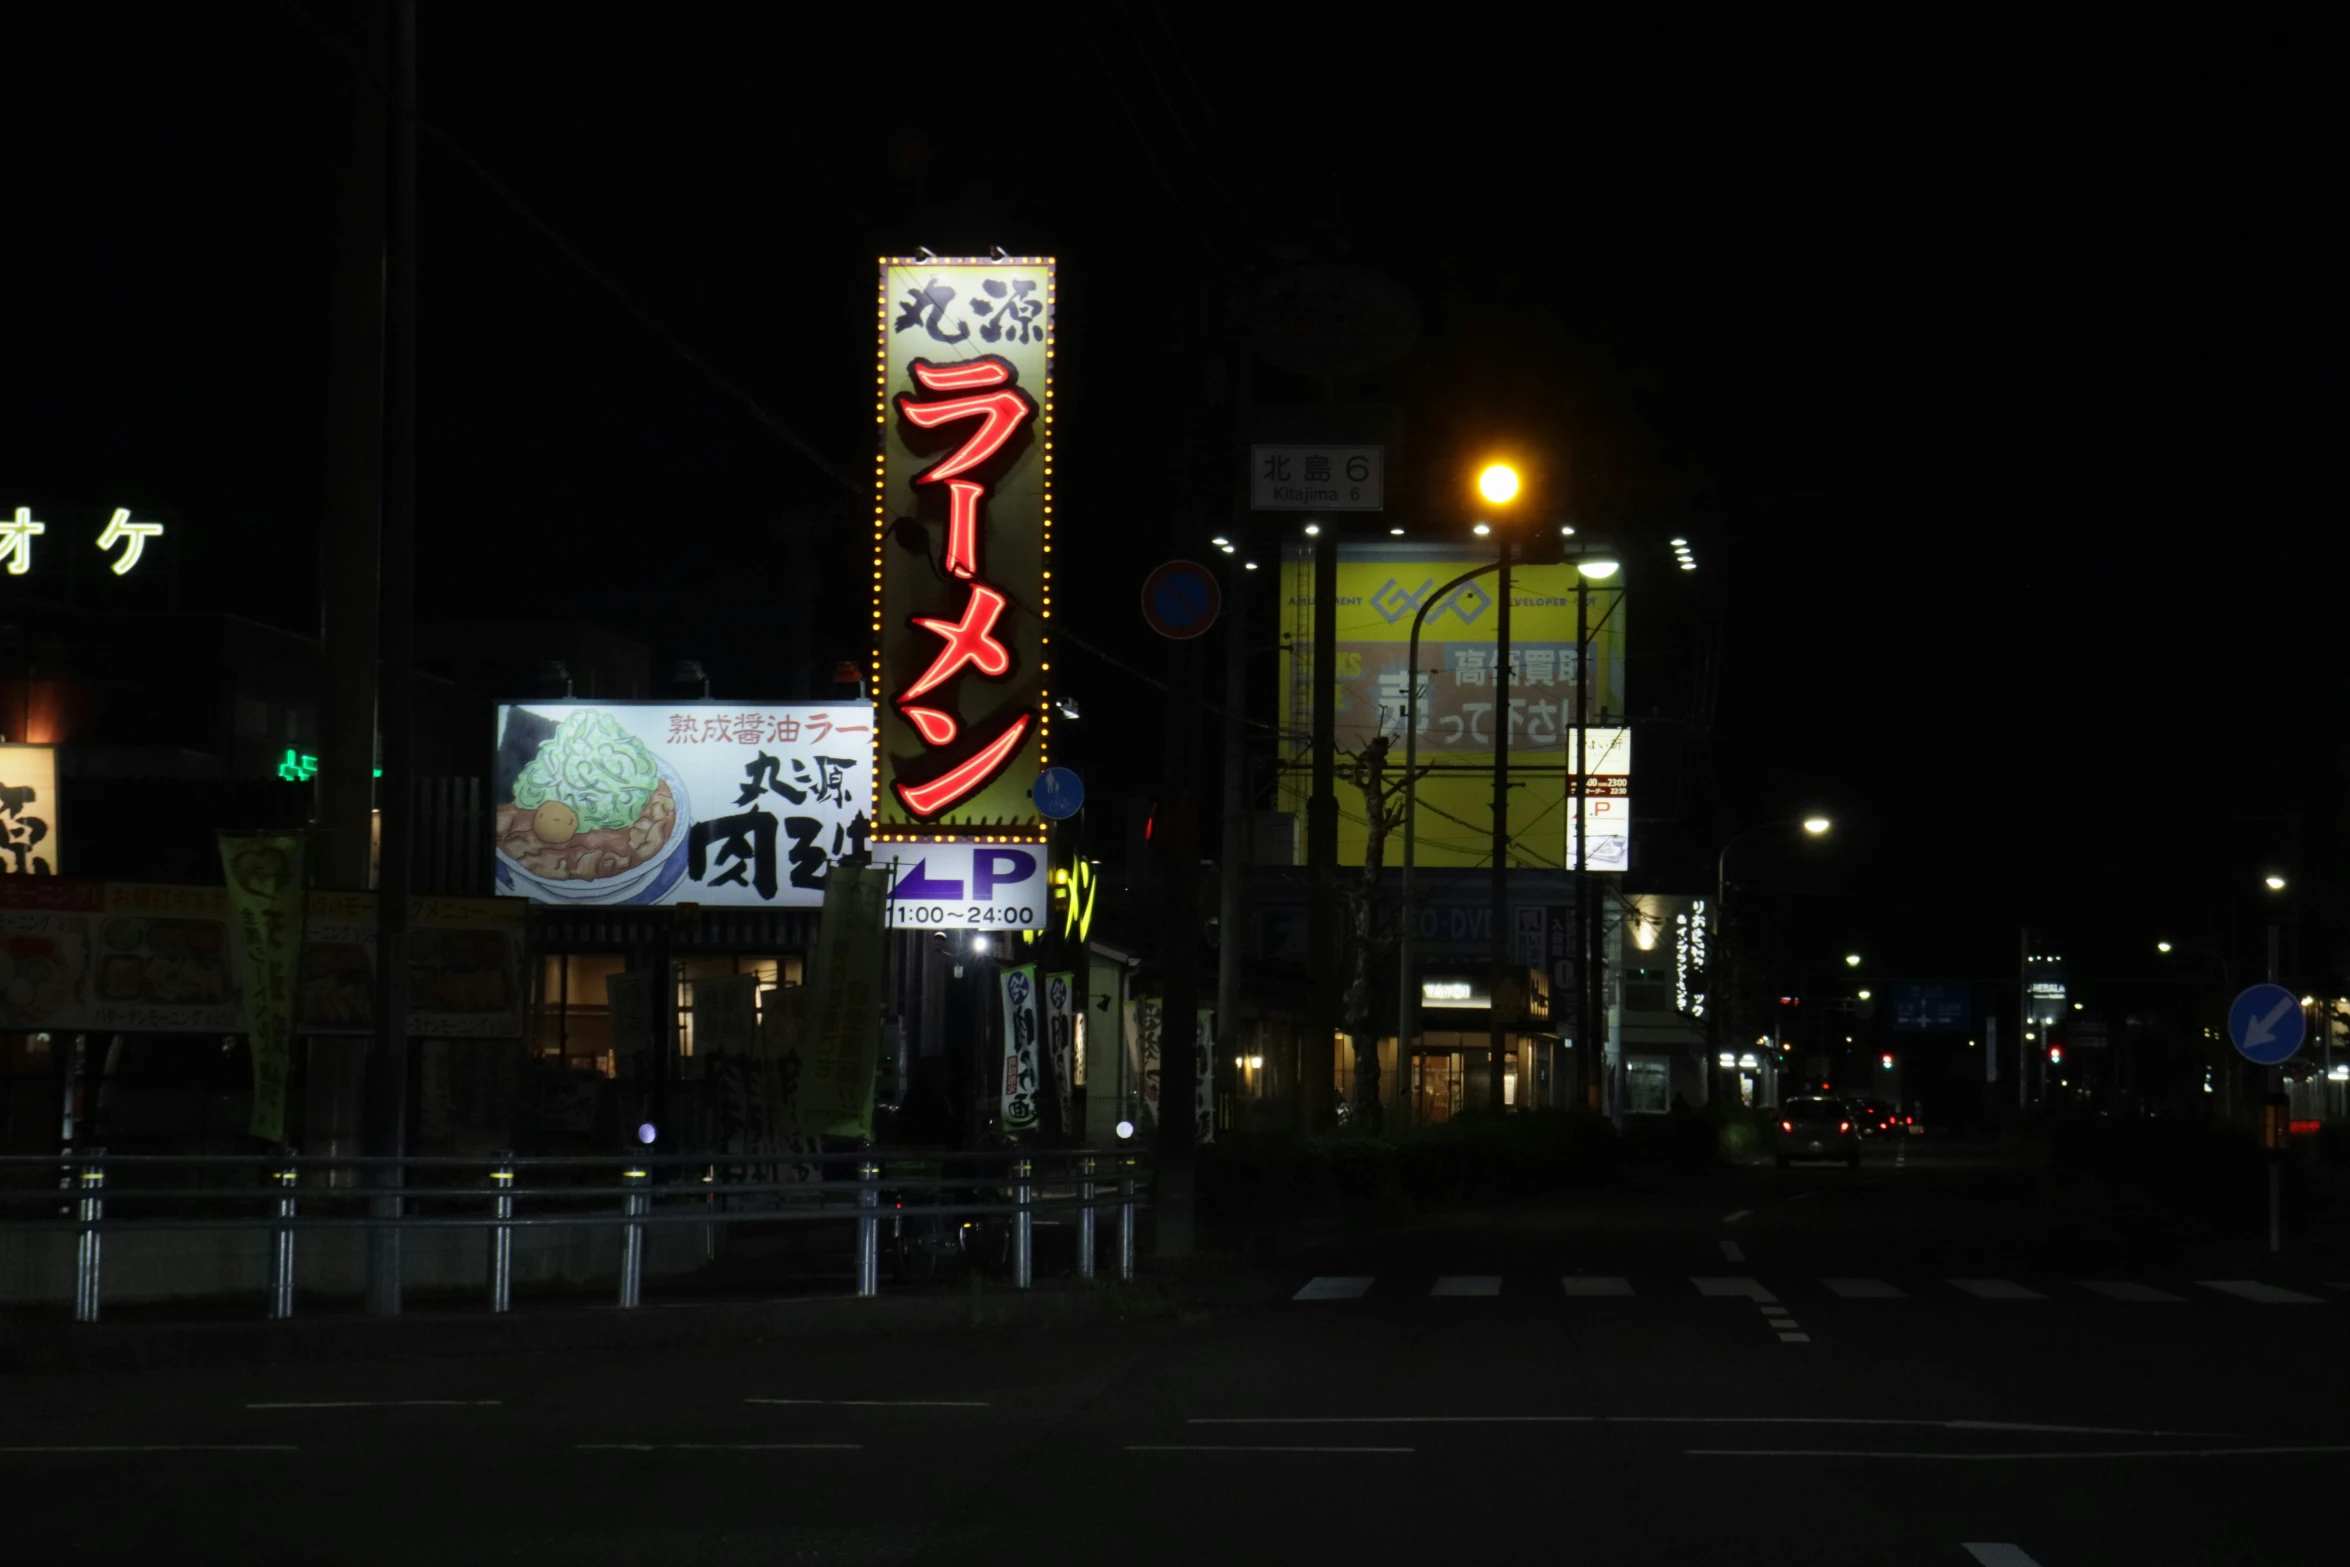 illuminated billboards in the night advertising a fast food restaurant